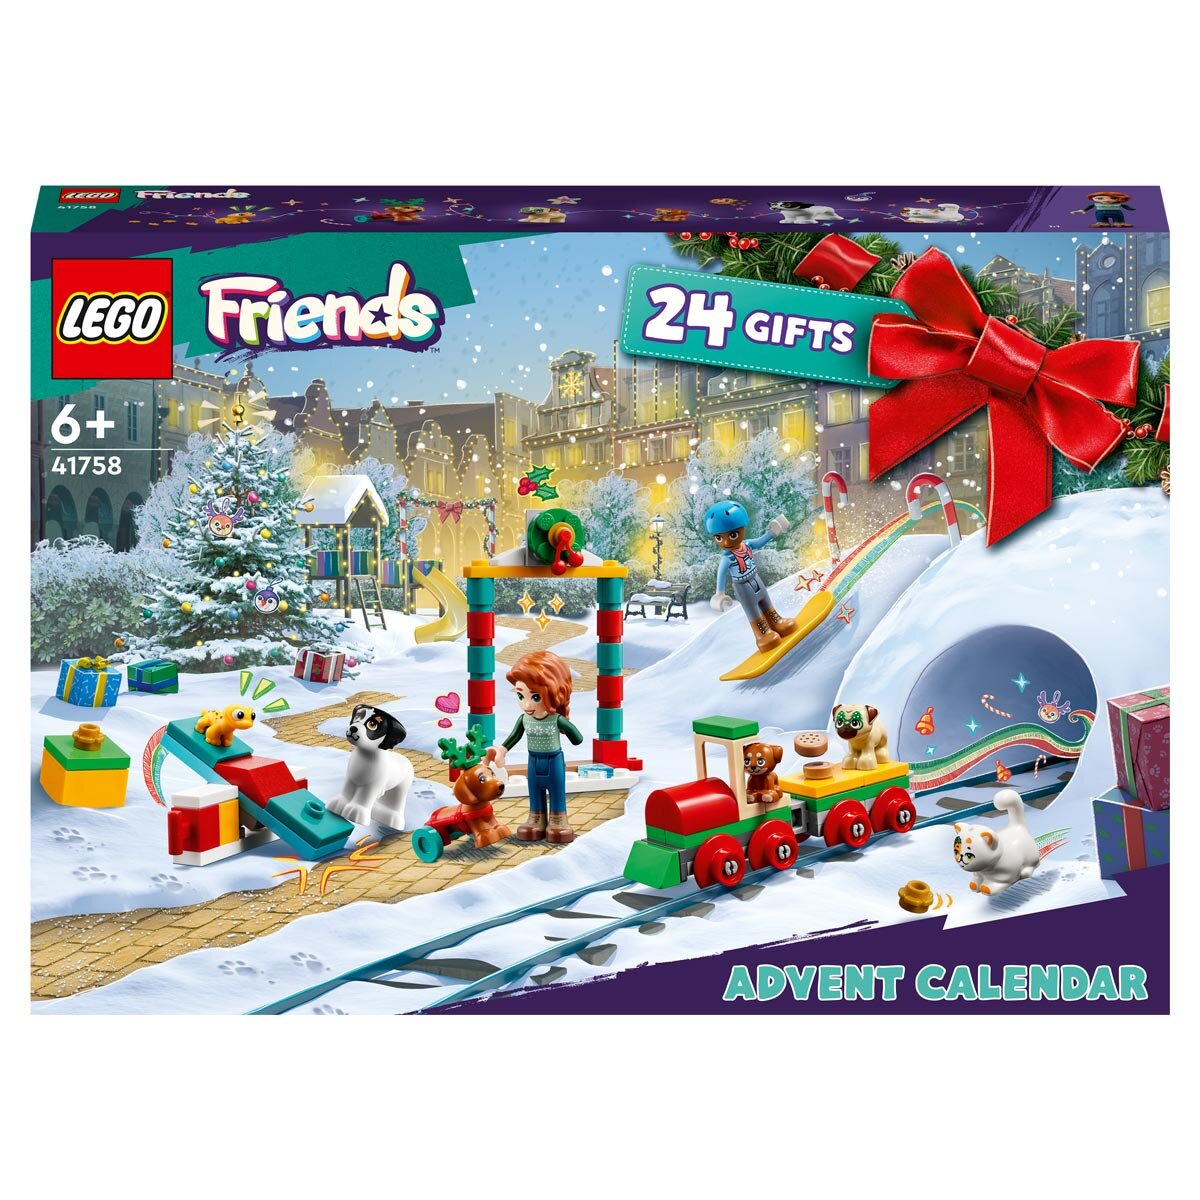 Buy LEGO Friends Advent Calendar Box Image at Costco.co.uk